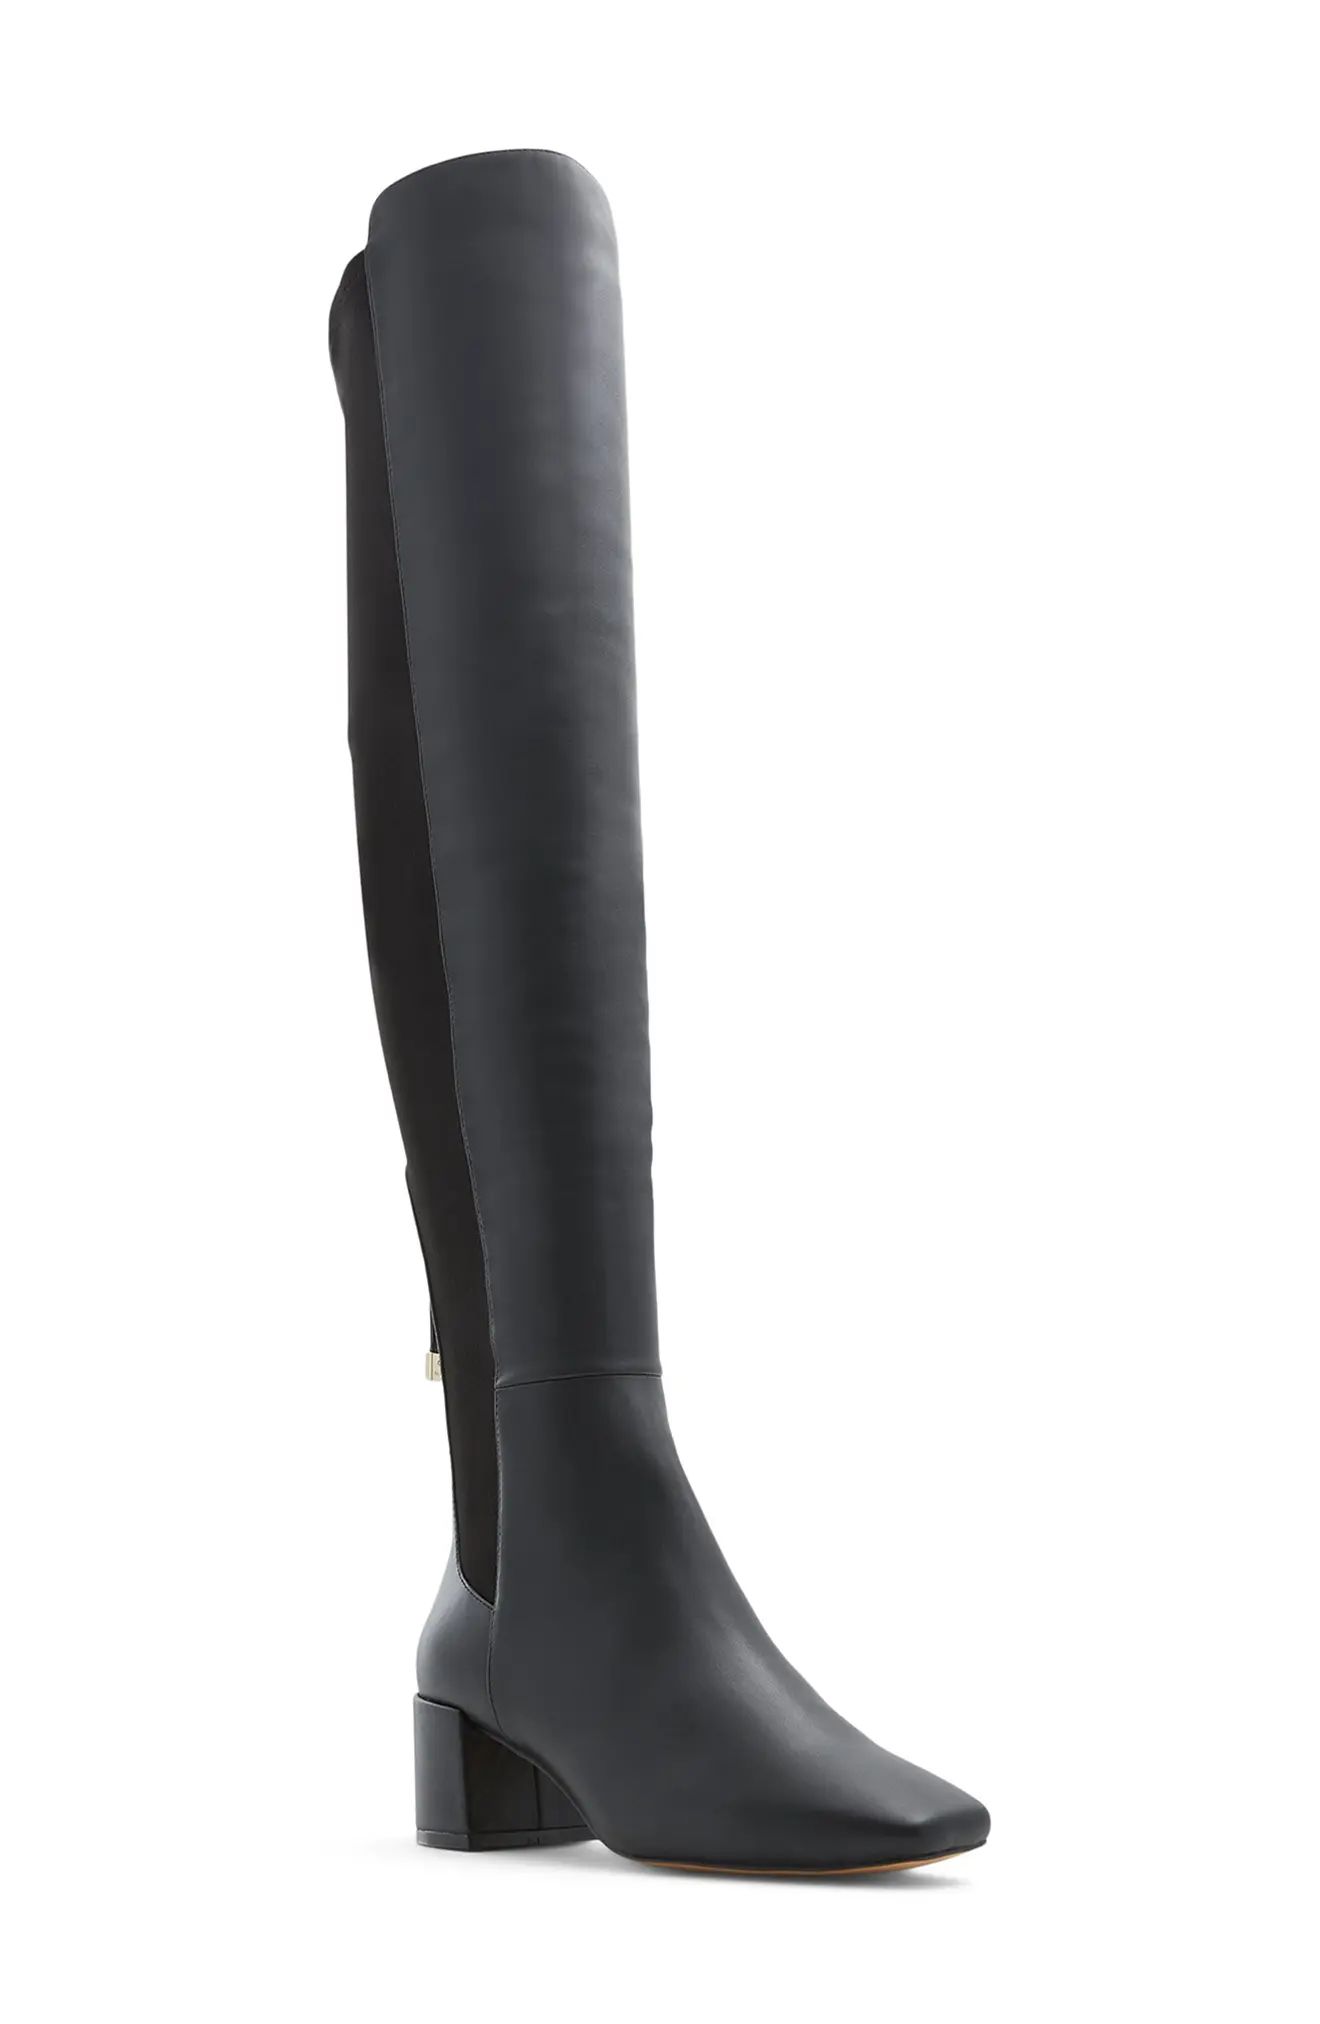 ALDO Pellagia Over the Knee Boot, Size 8 in Black at Nordstrom | Nordstrom